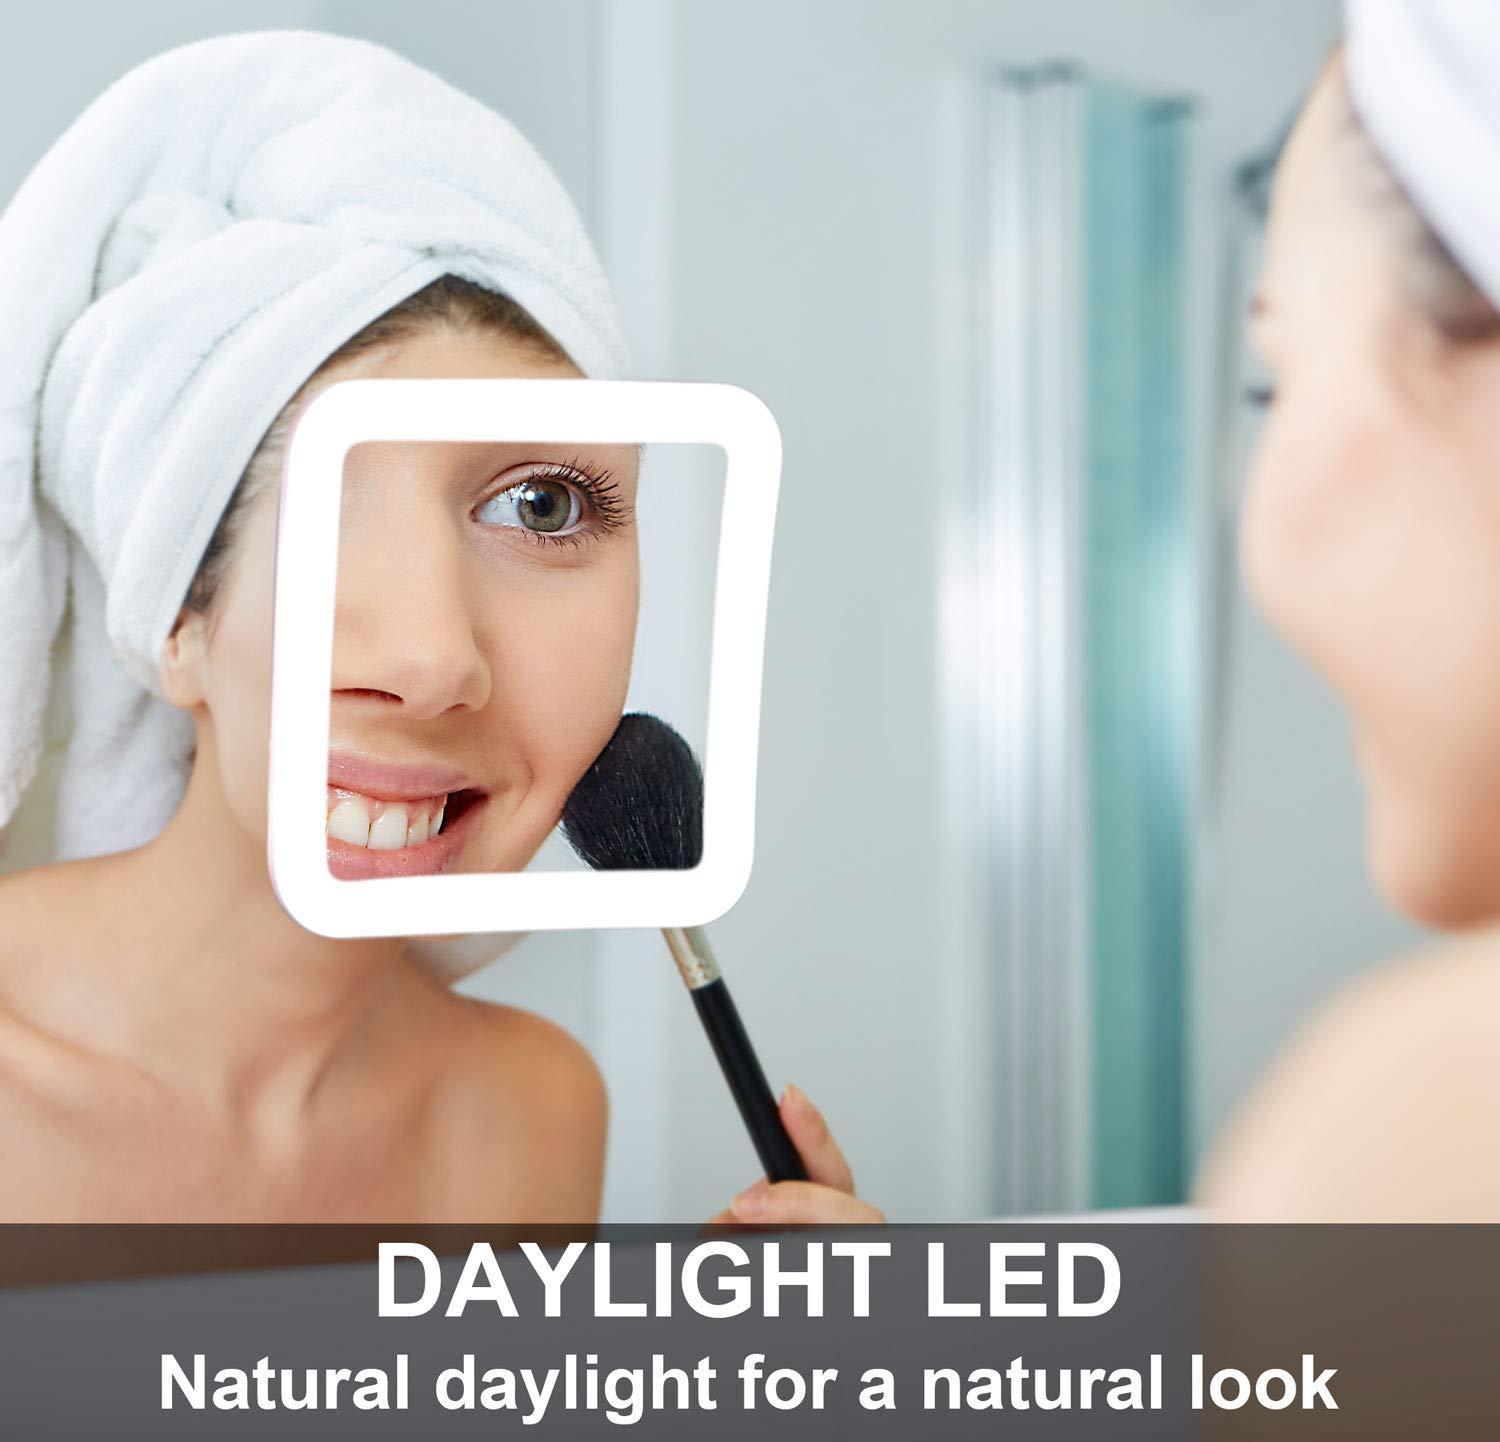 Fancii 7x Led Lighted Magnifying Makeup